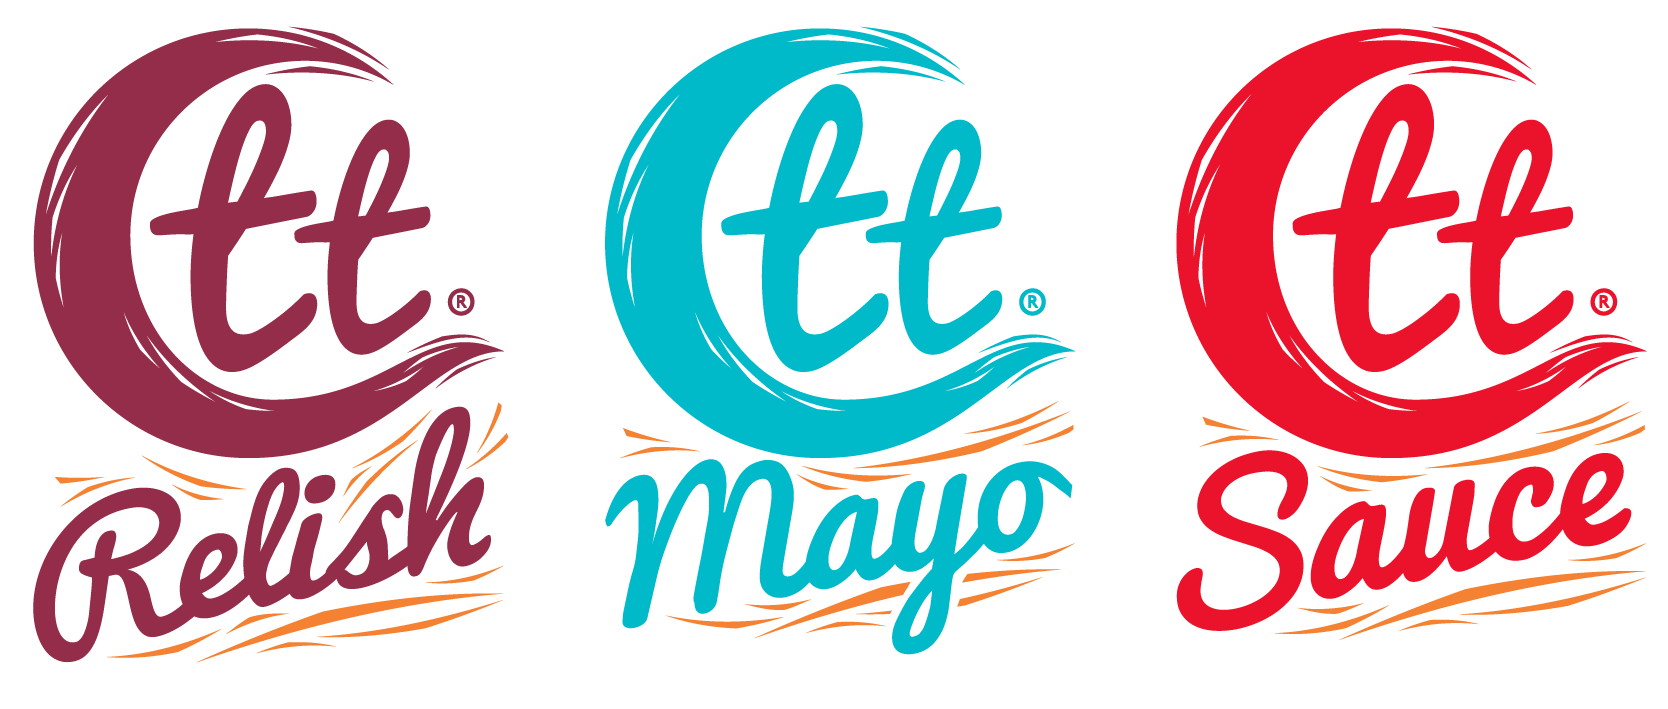 Sauce Logo - TT Sauce / Concept logo designs. Carta Graphic Design